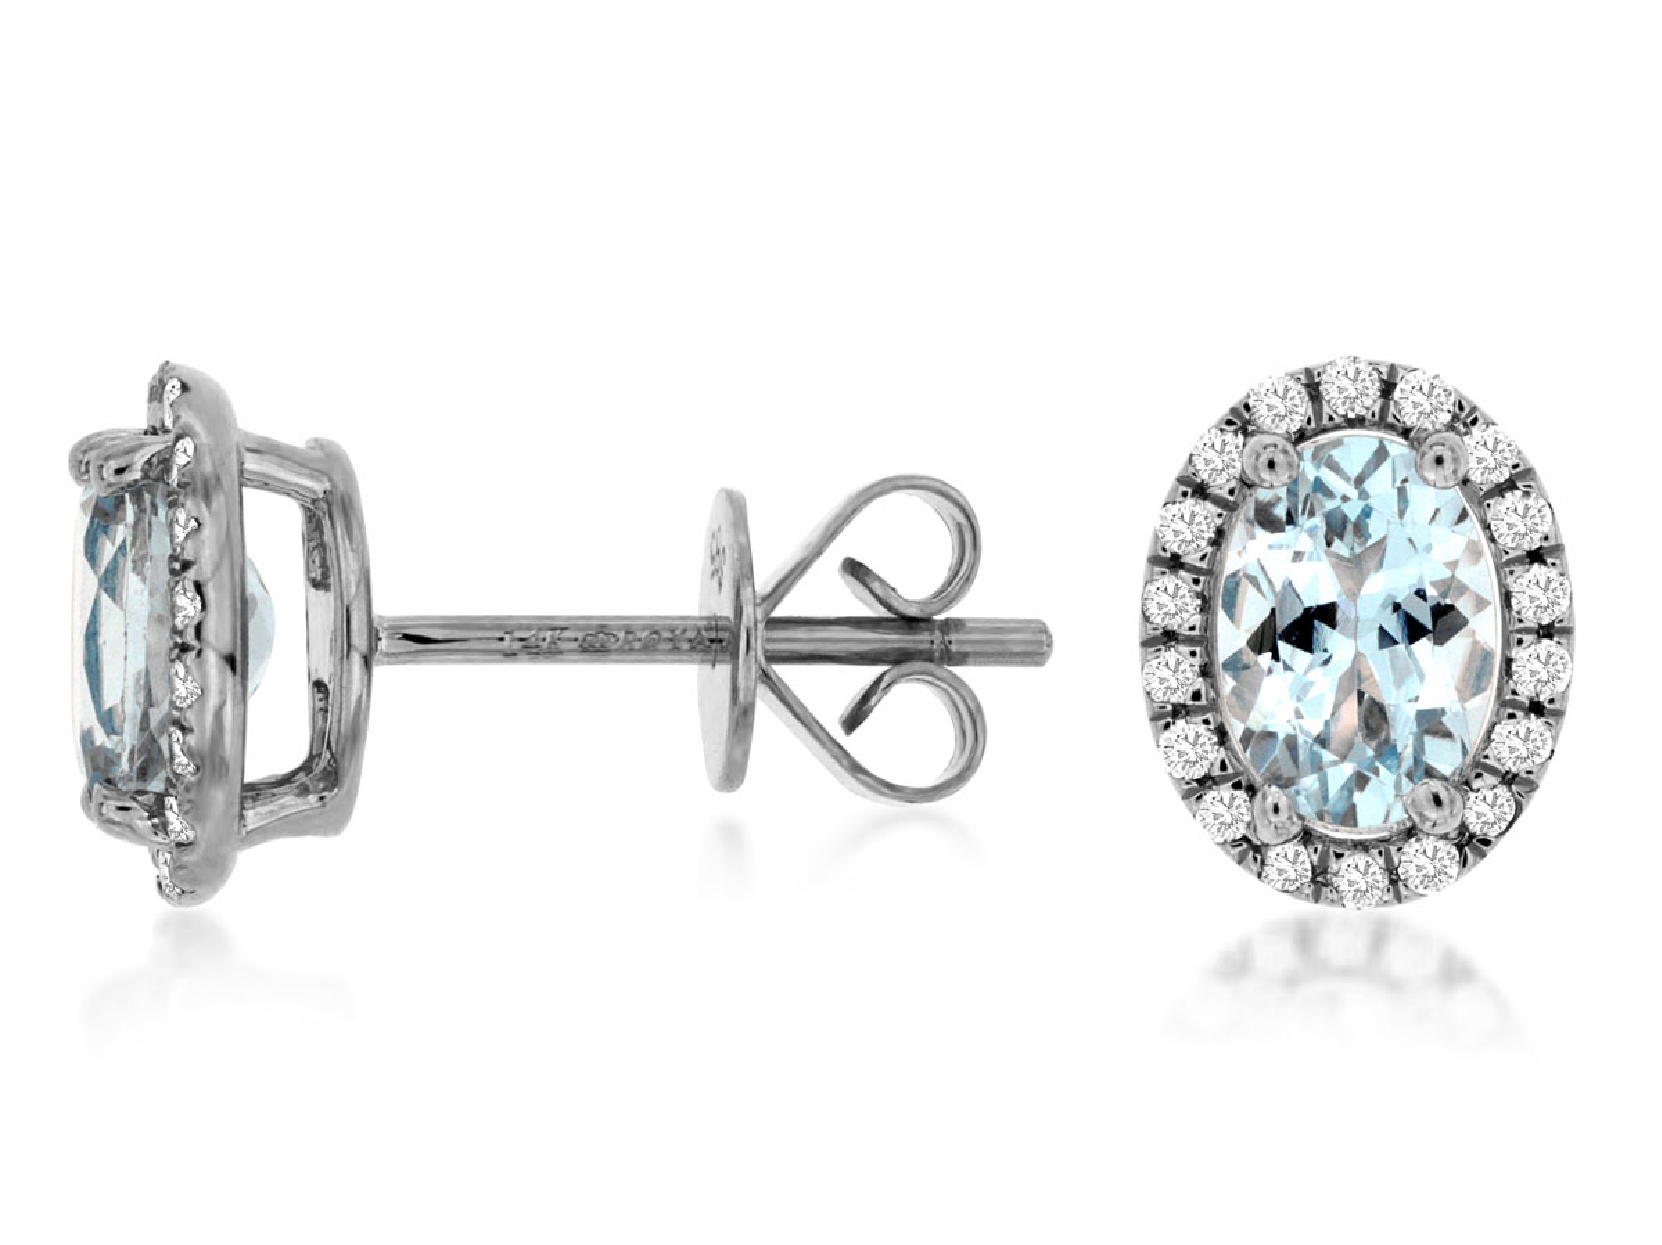 14K White Gold Oval Aquamarine Earrings with Diamond Halo
.19CT Diamonds
1.35CT Aquamarines 